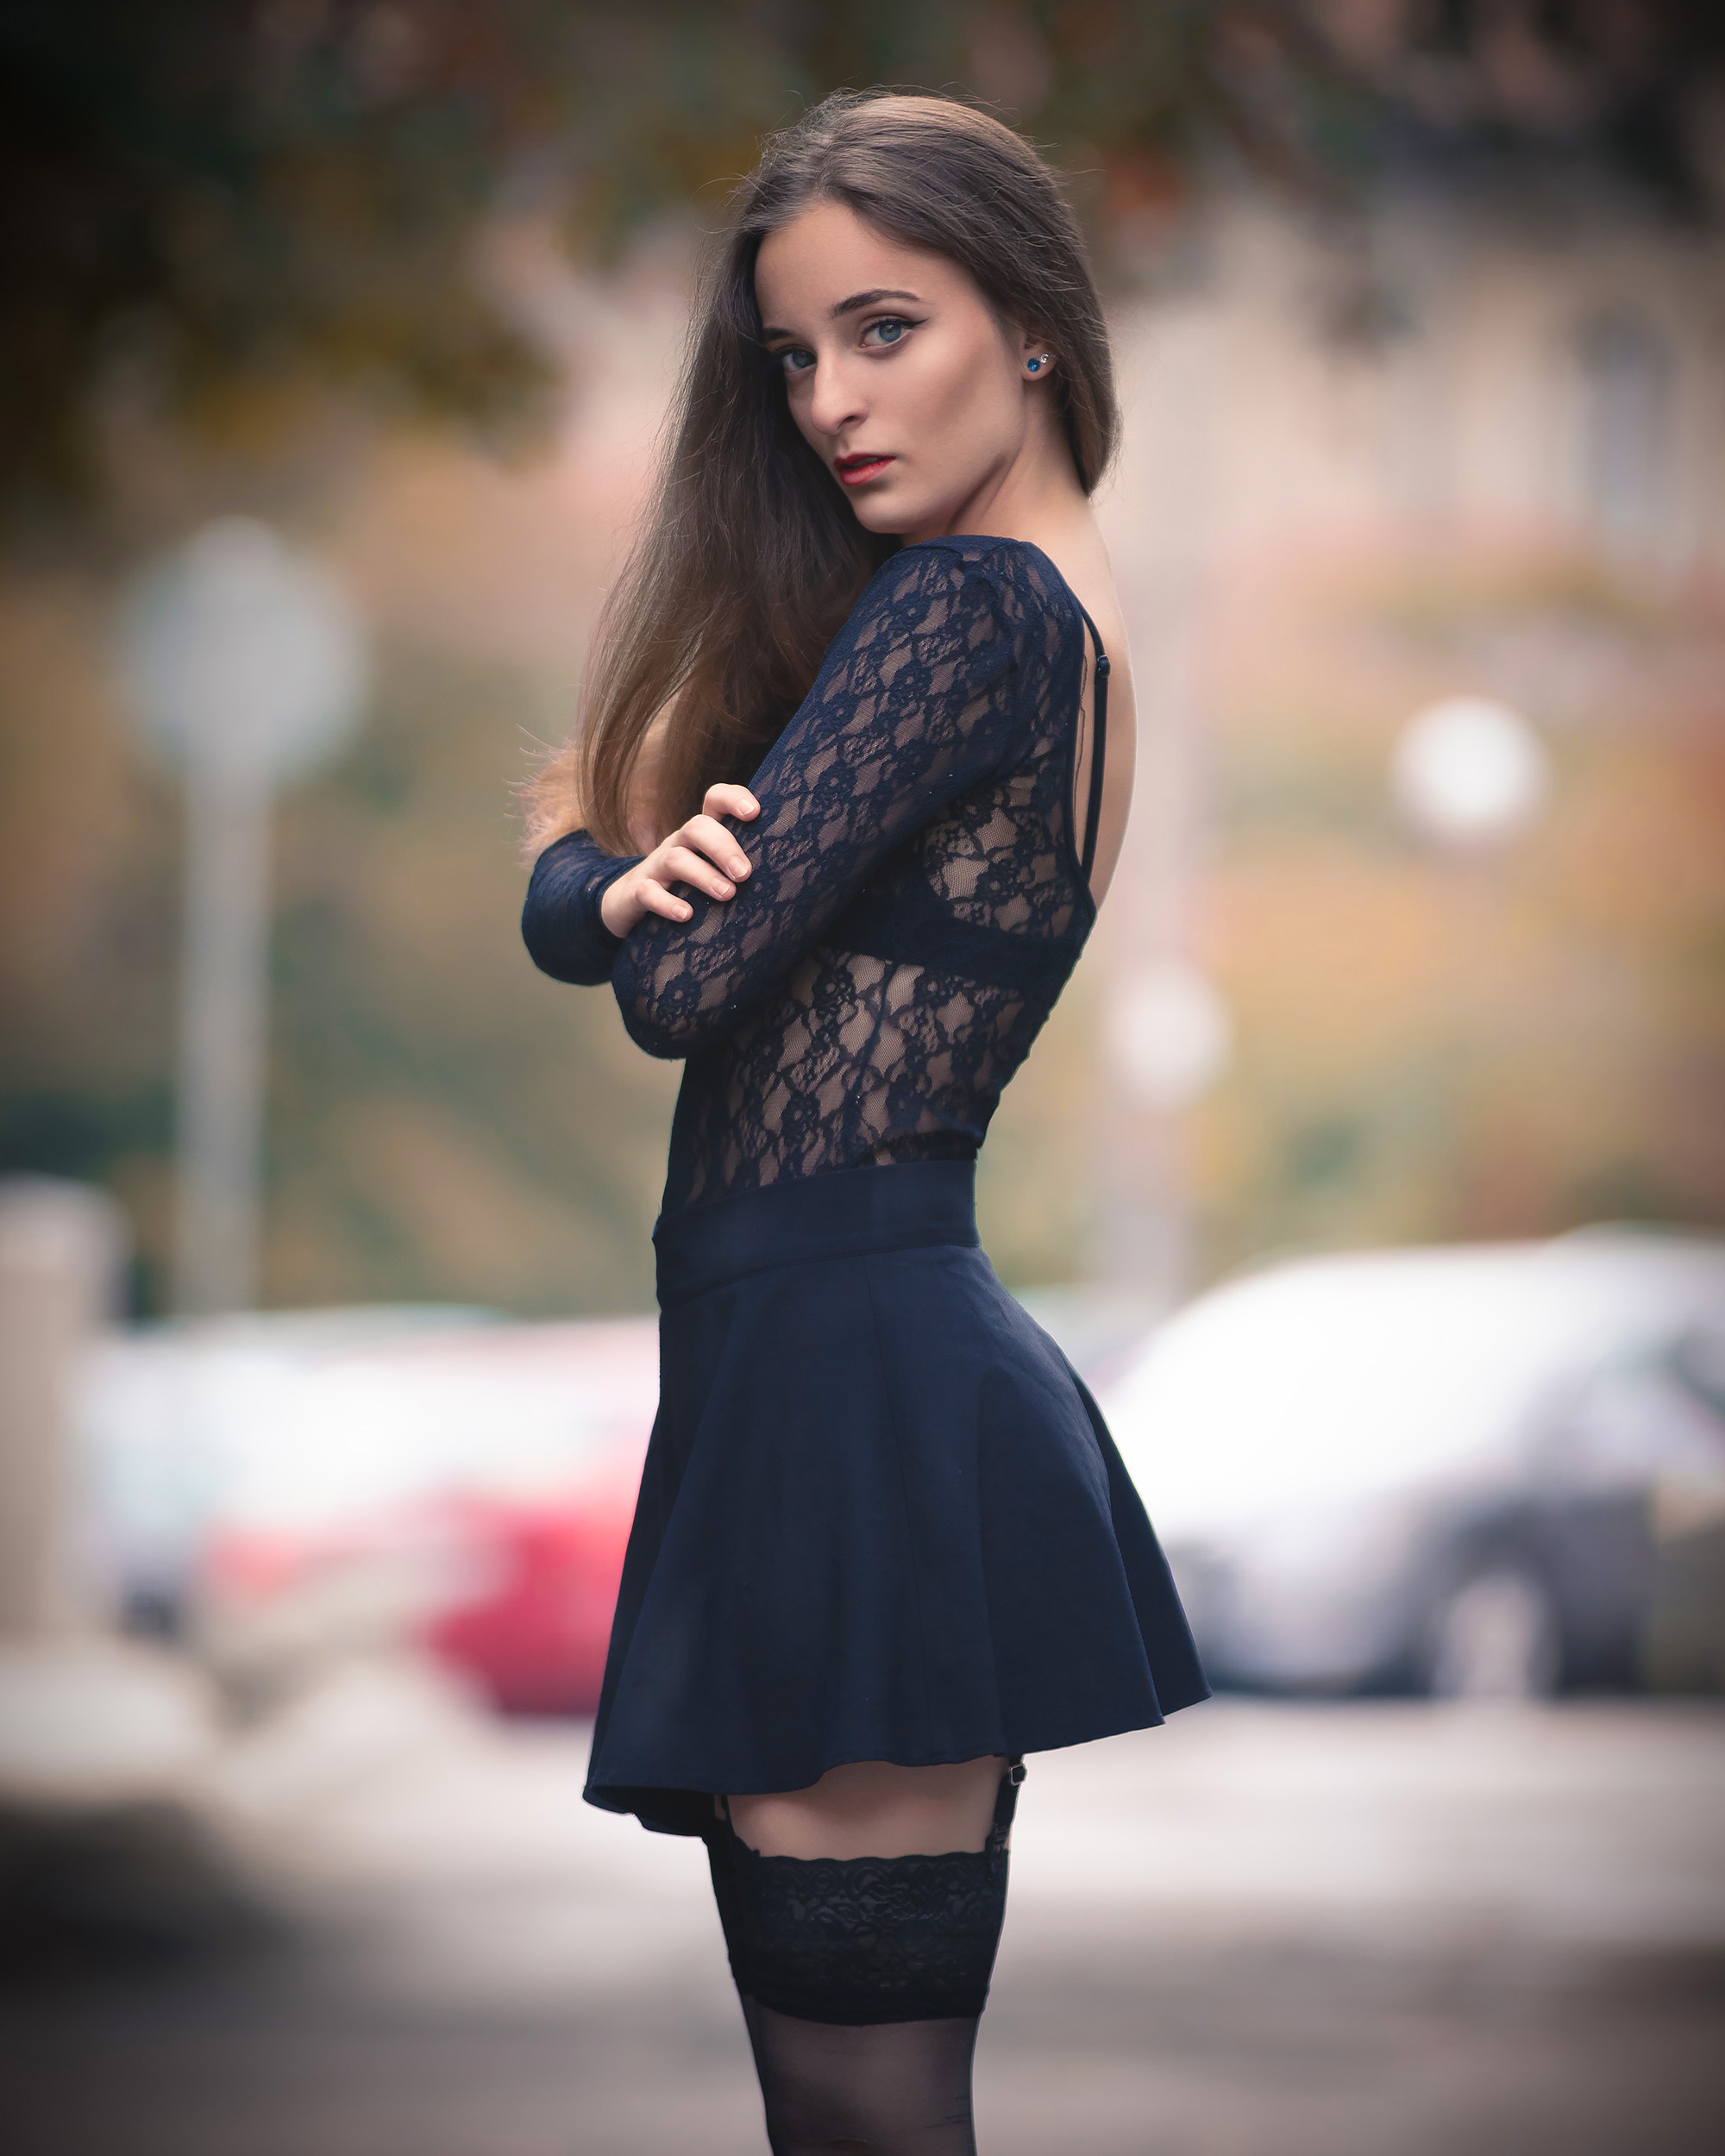 Девушка. Фотограф Дмитрий Александров